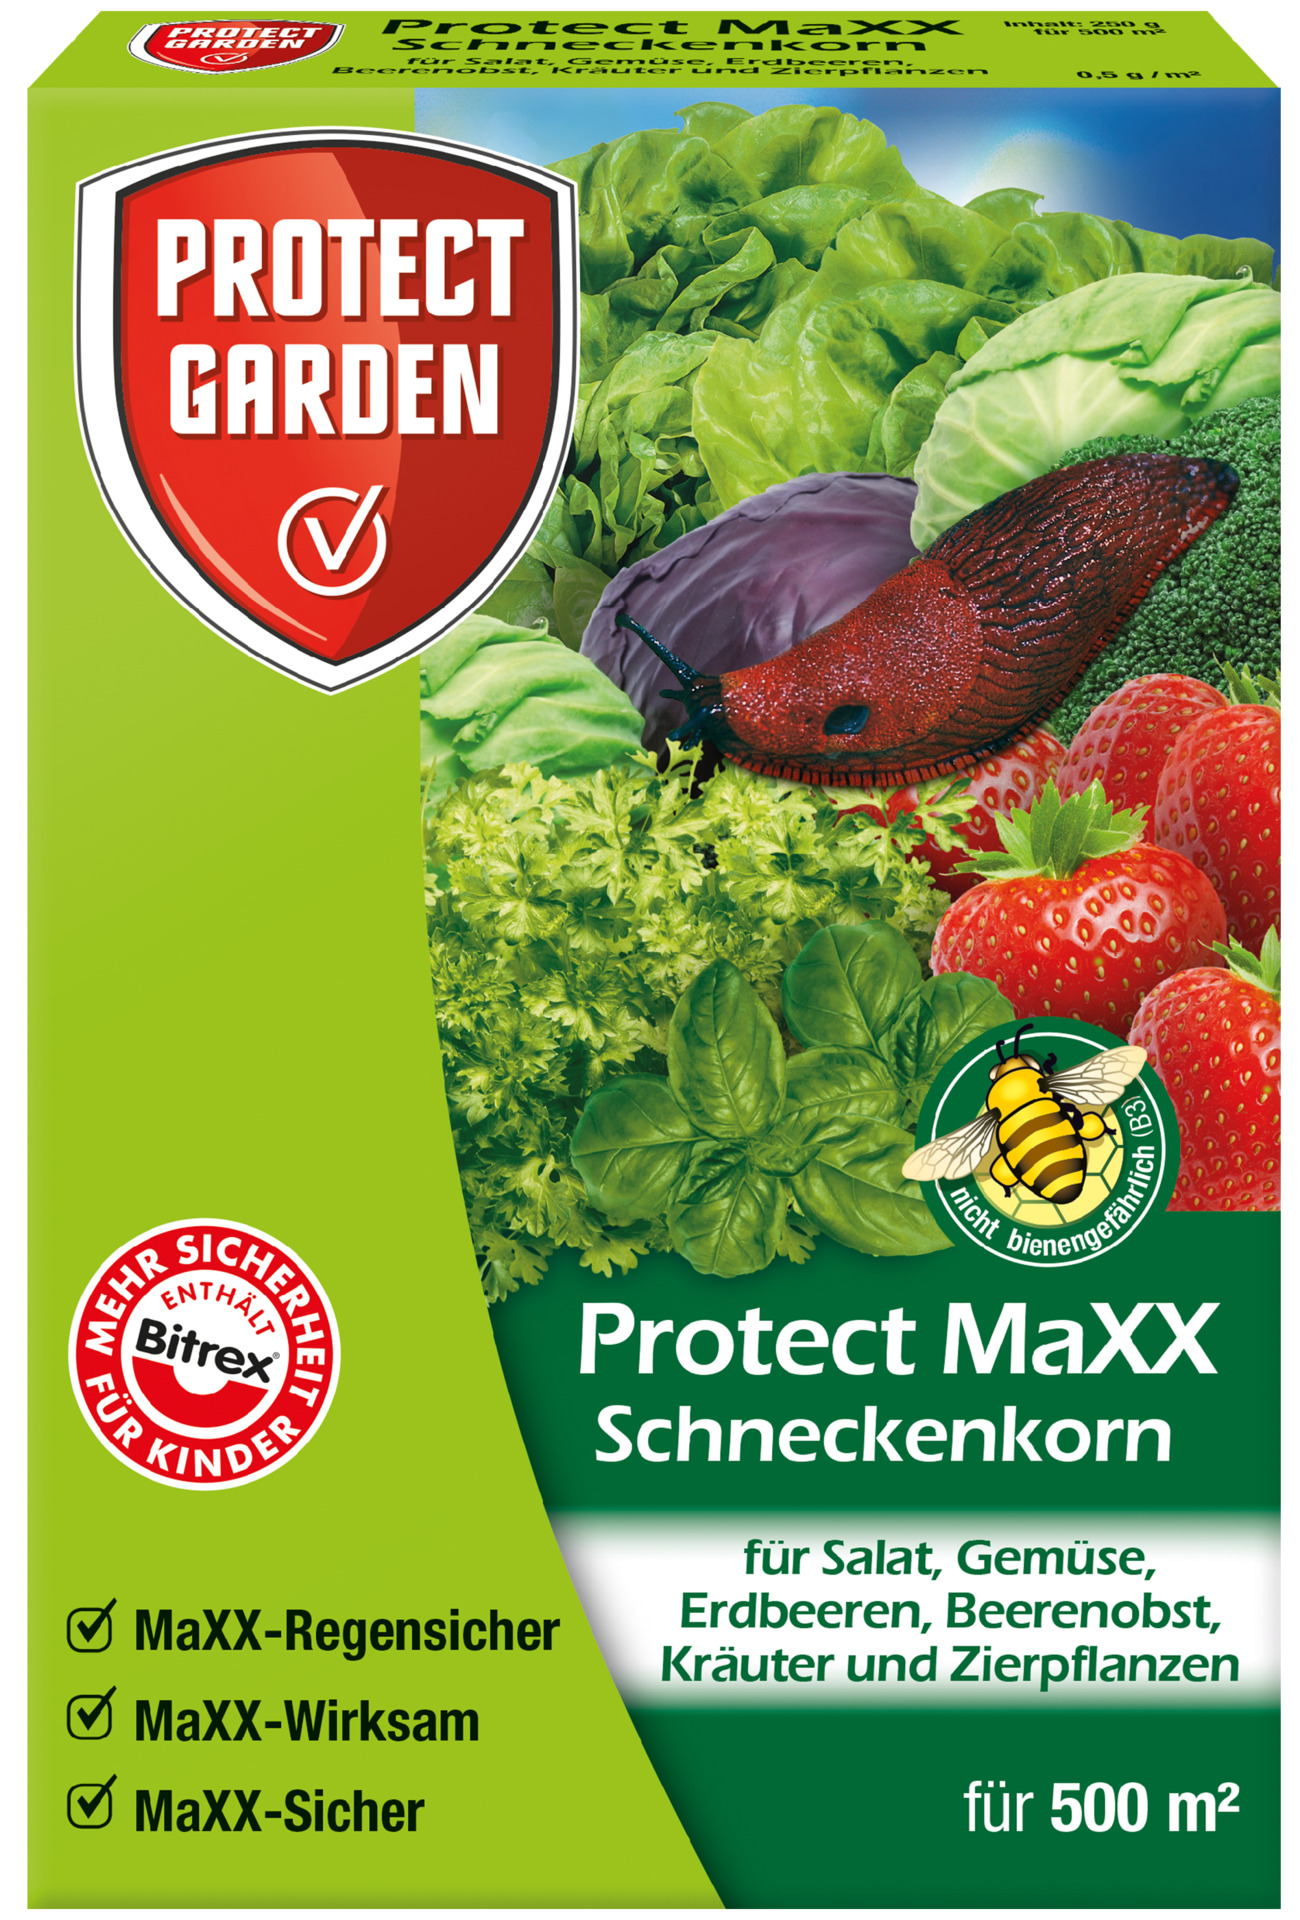 SBM Life Sience GmbH Protect MaXX Schneckenkorn